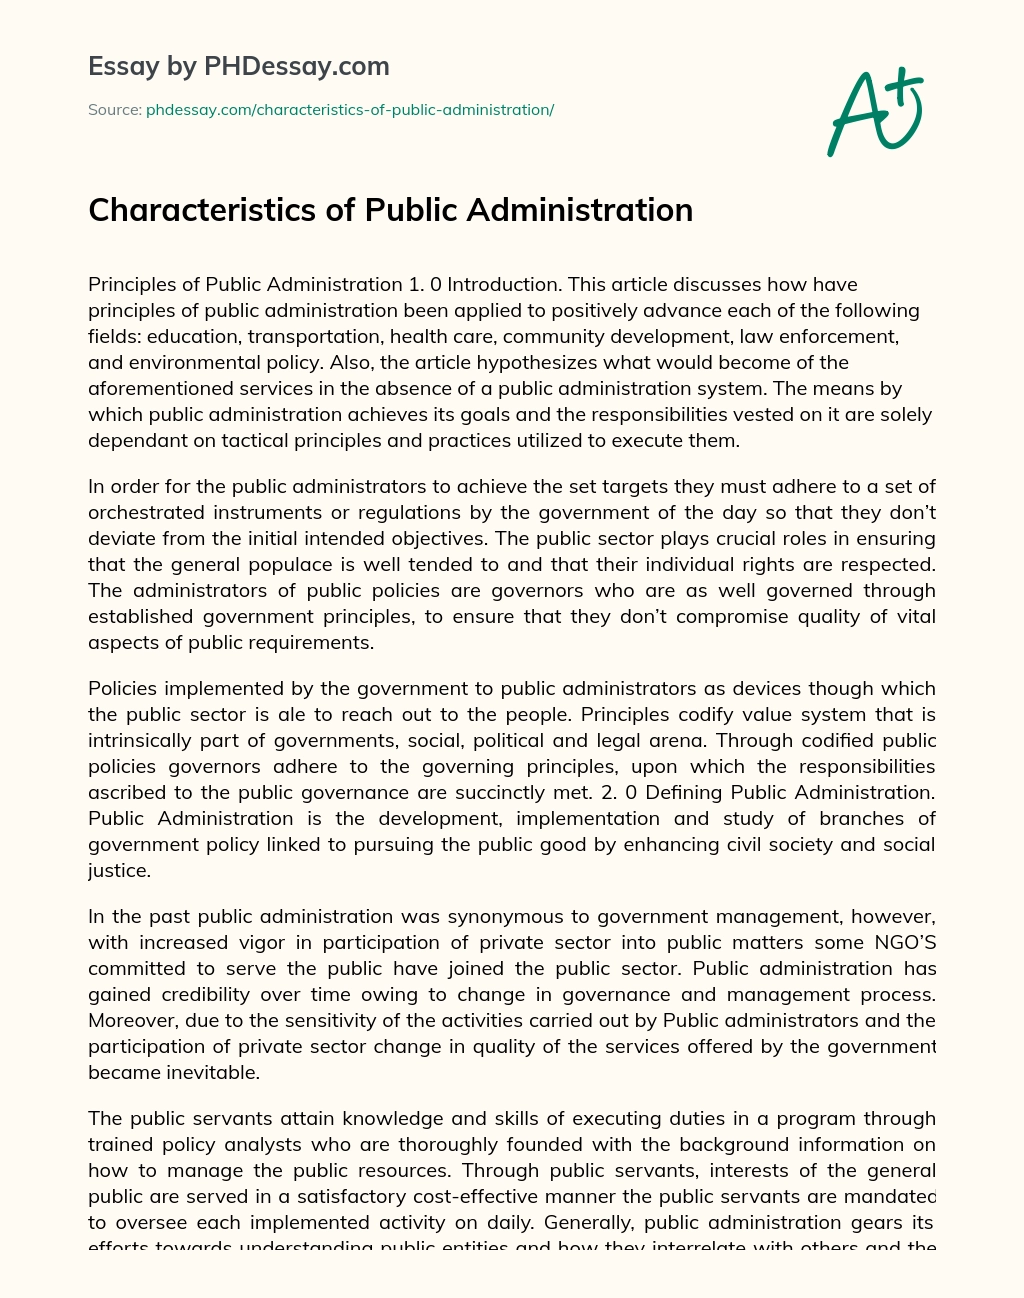 Characteristics of Public Administration essay